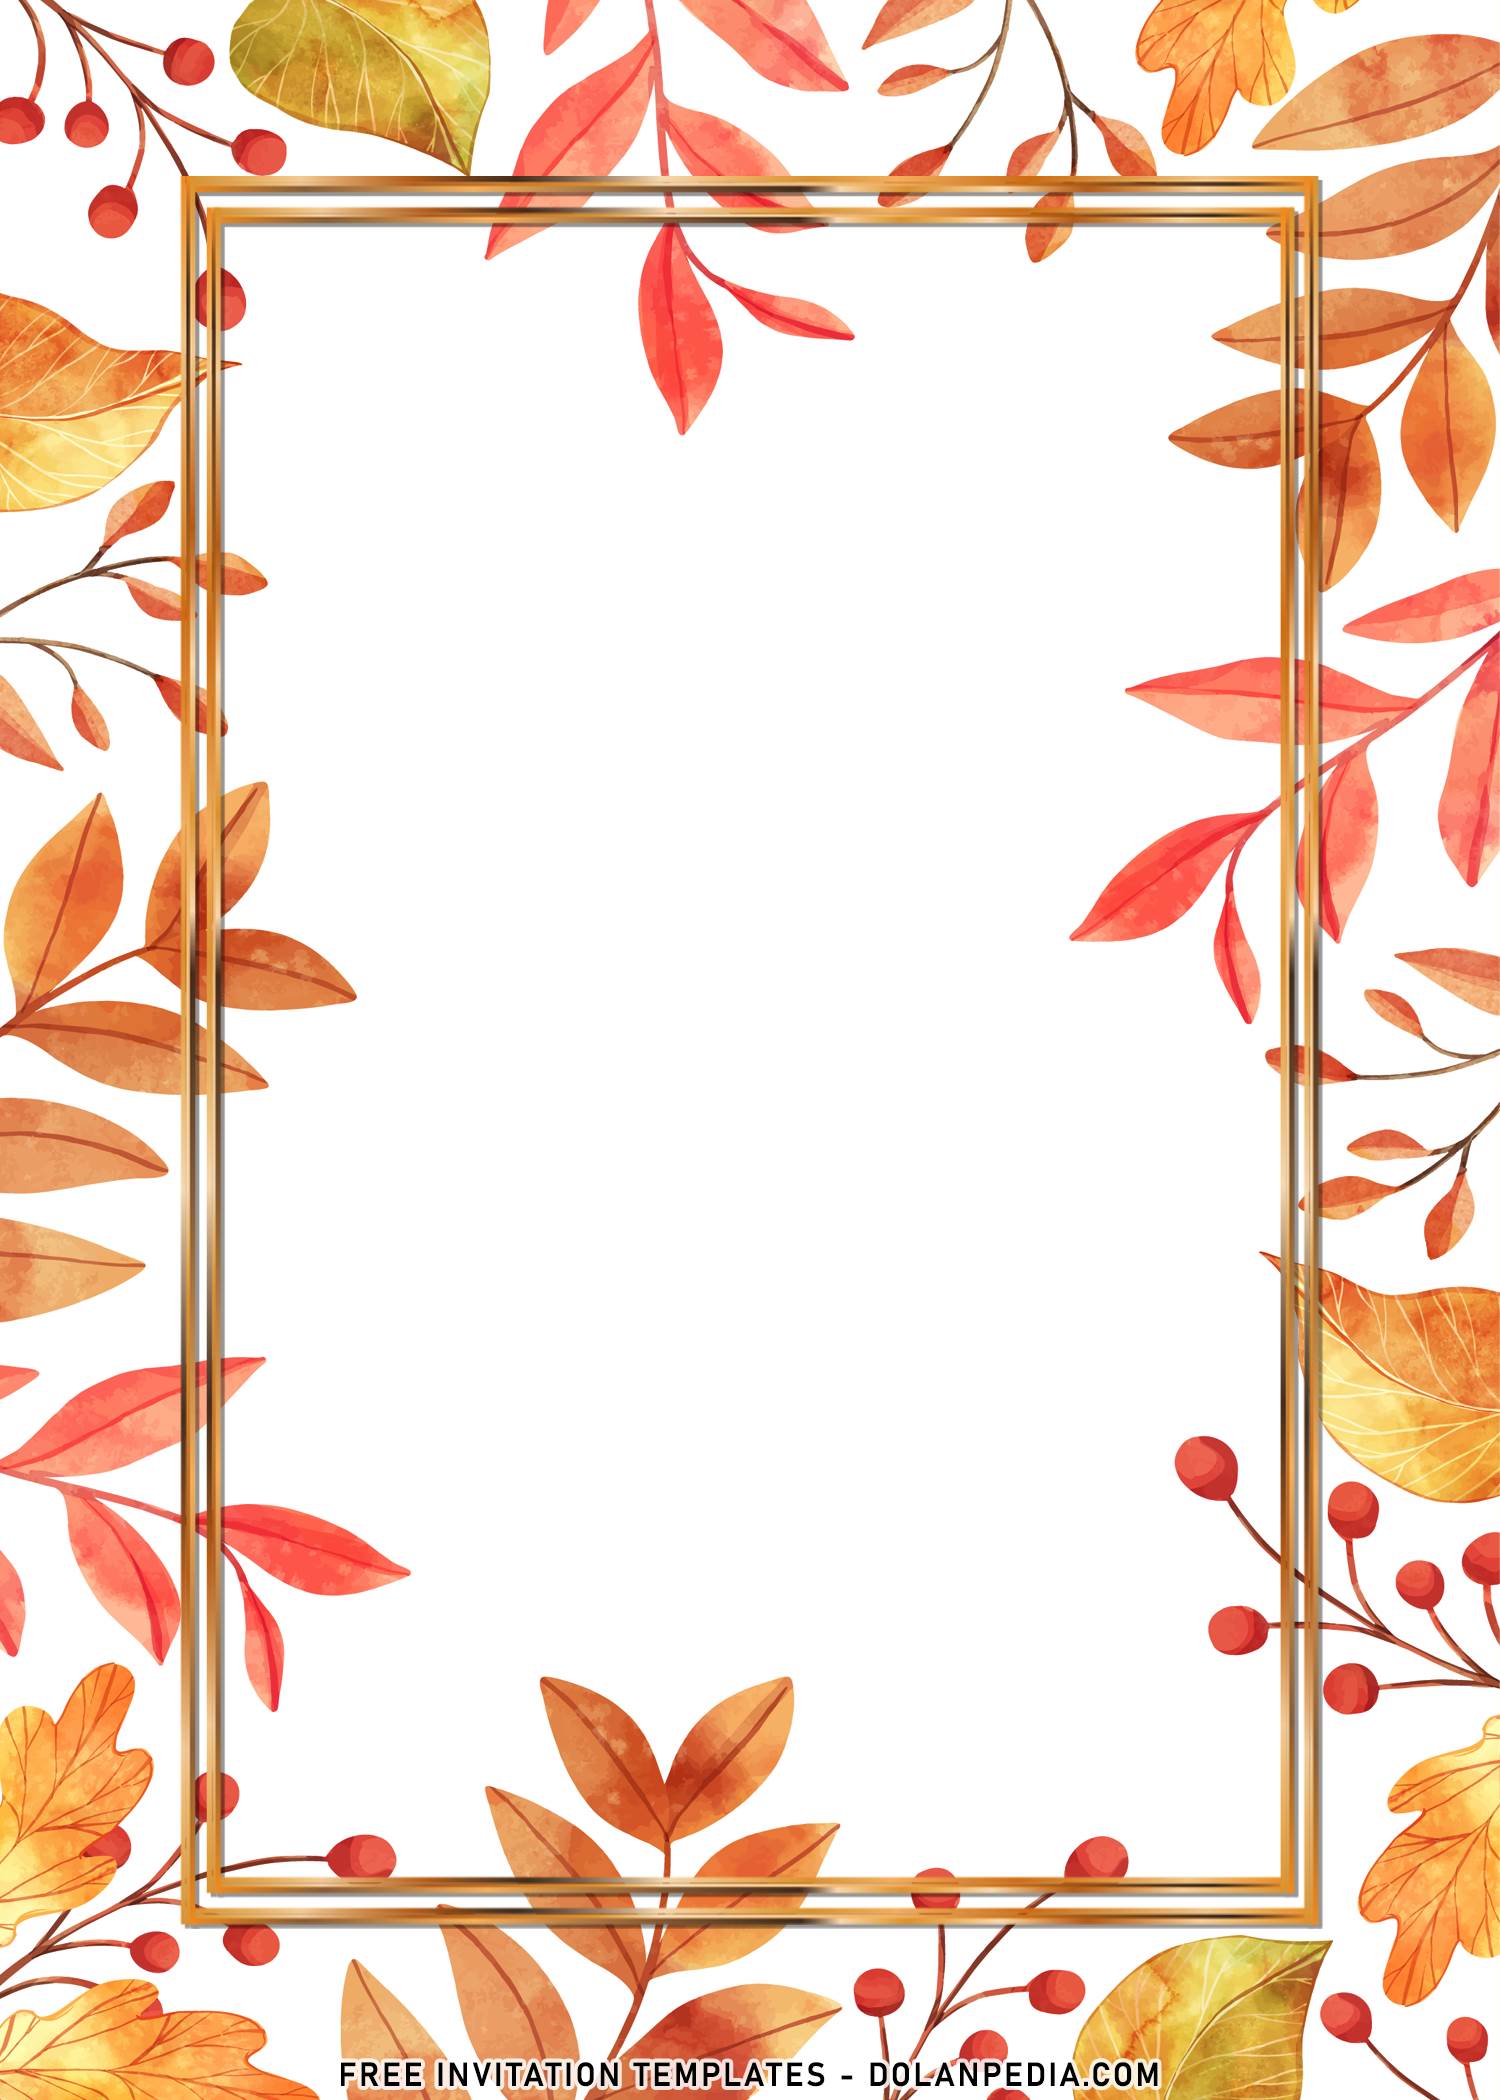 11+ Watercolor Autumn Leaves Birthday Invitation Templates | Dolanpedia ...